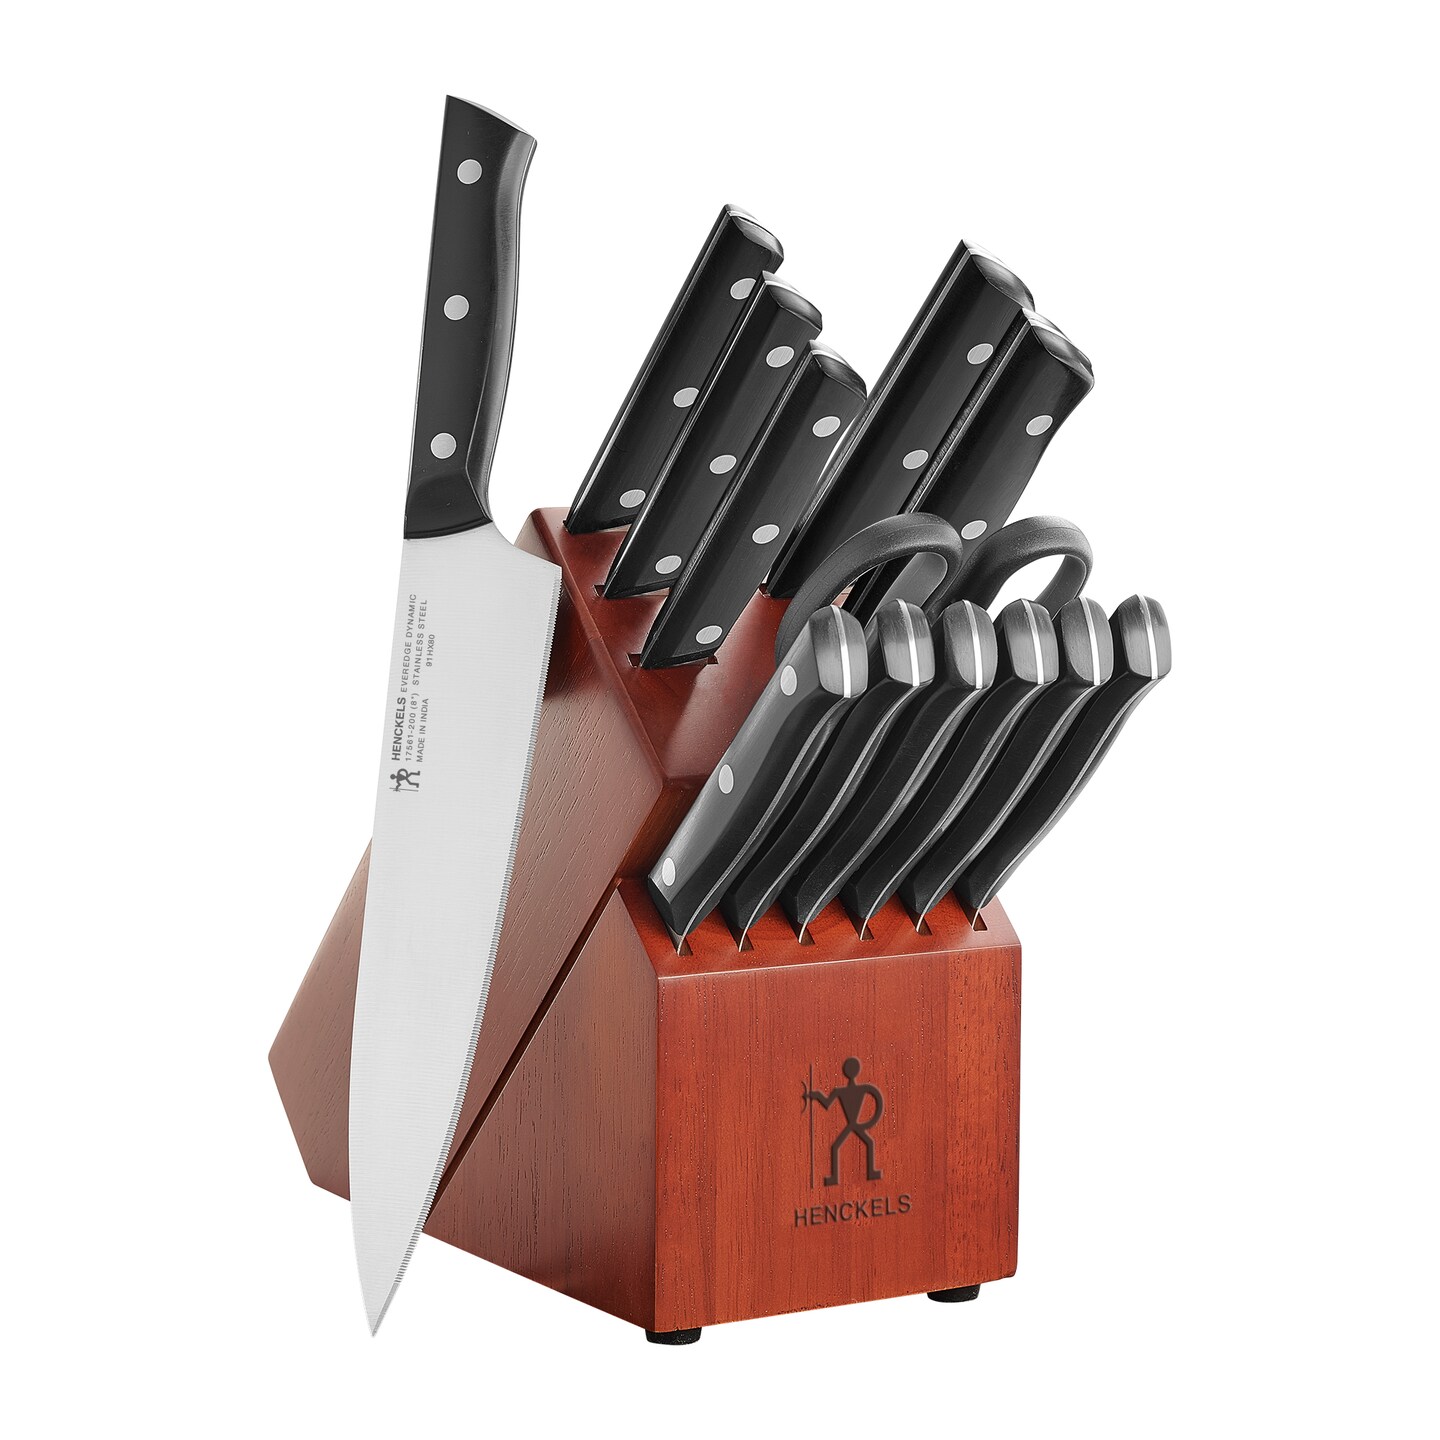 Henckels Everedge Dynamic 14-pc Knife Block Set